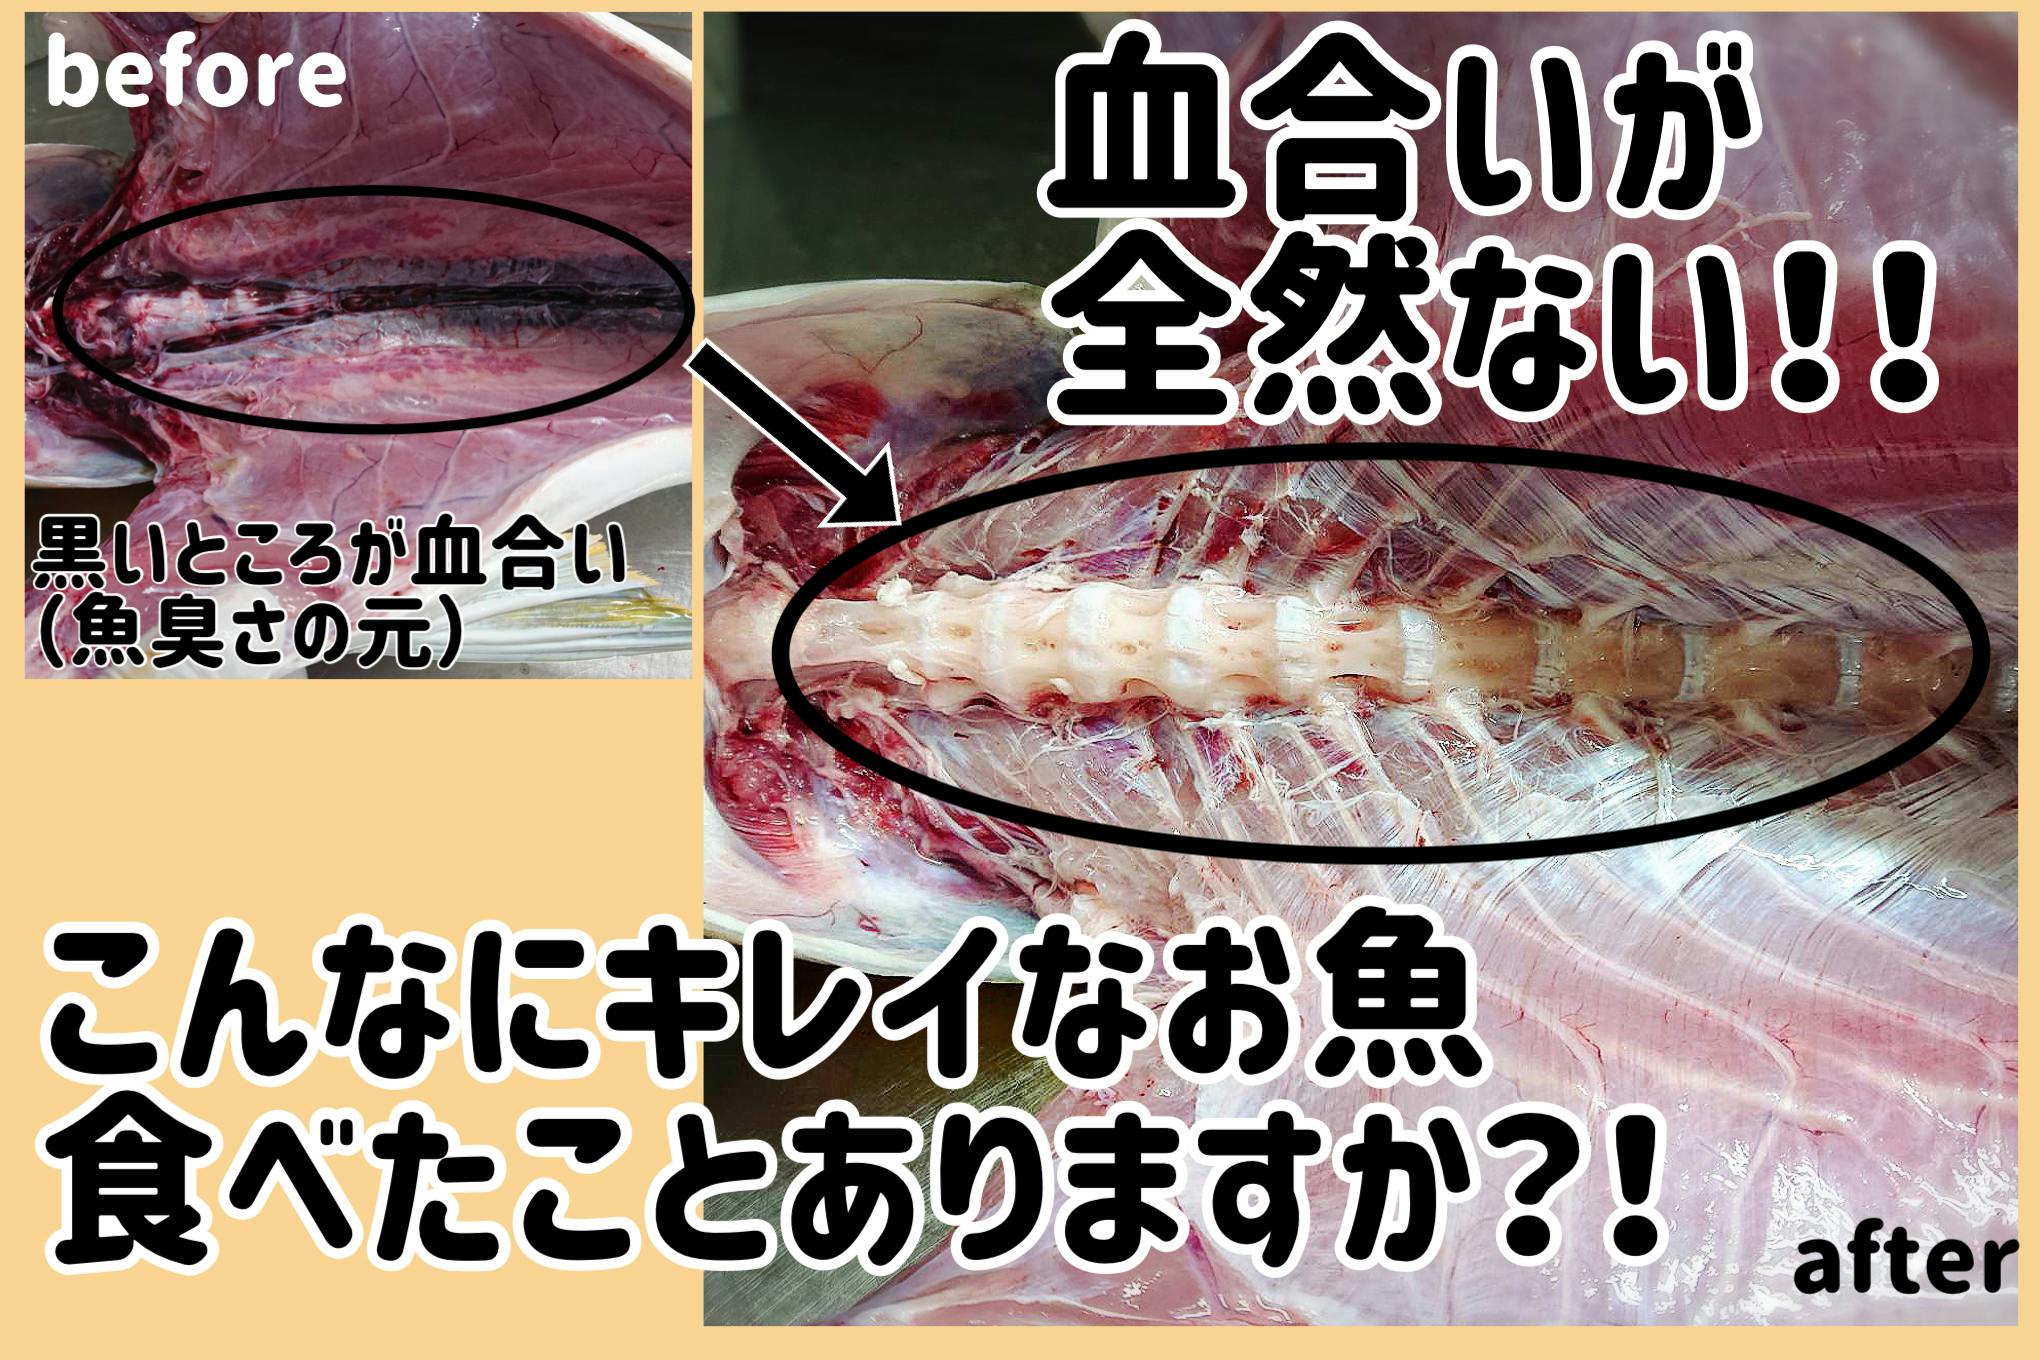 CAMPFIRE　コロナ禍で長崎の伝統漁が消滅危機！！　(キャンプファイヤー)